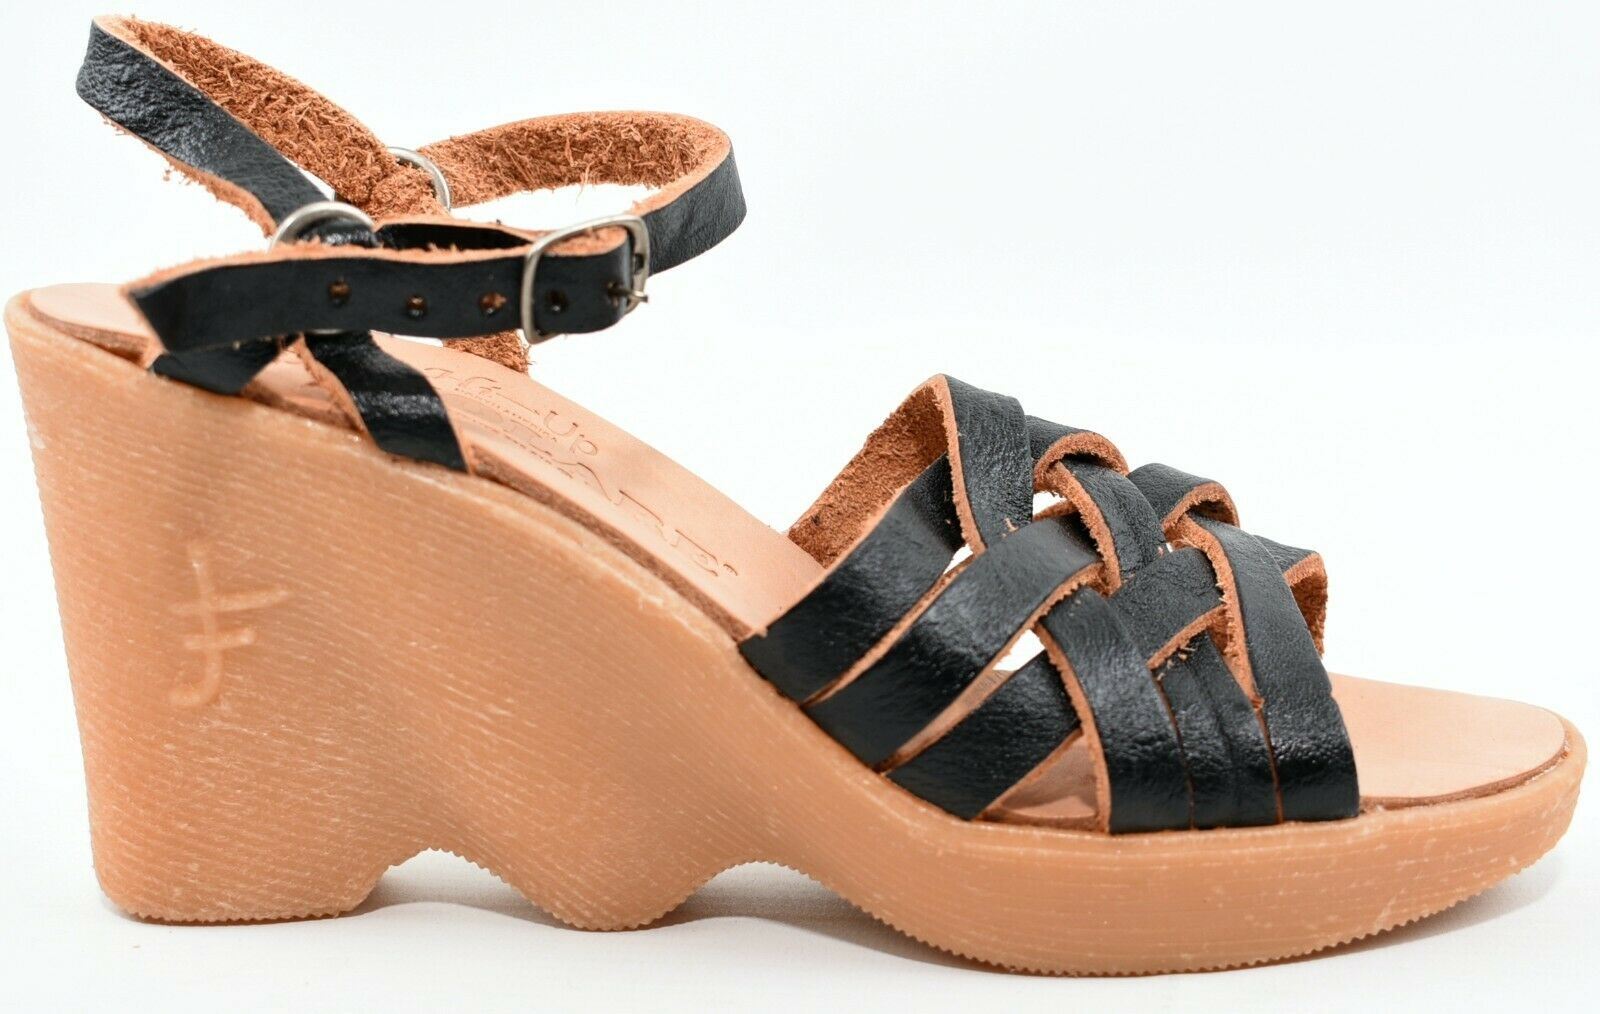 FAMOLARE Women's Black Genuine Leather Wedge Sandals, size UK 4.5